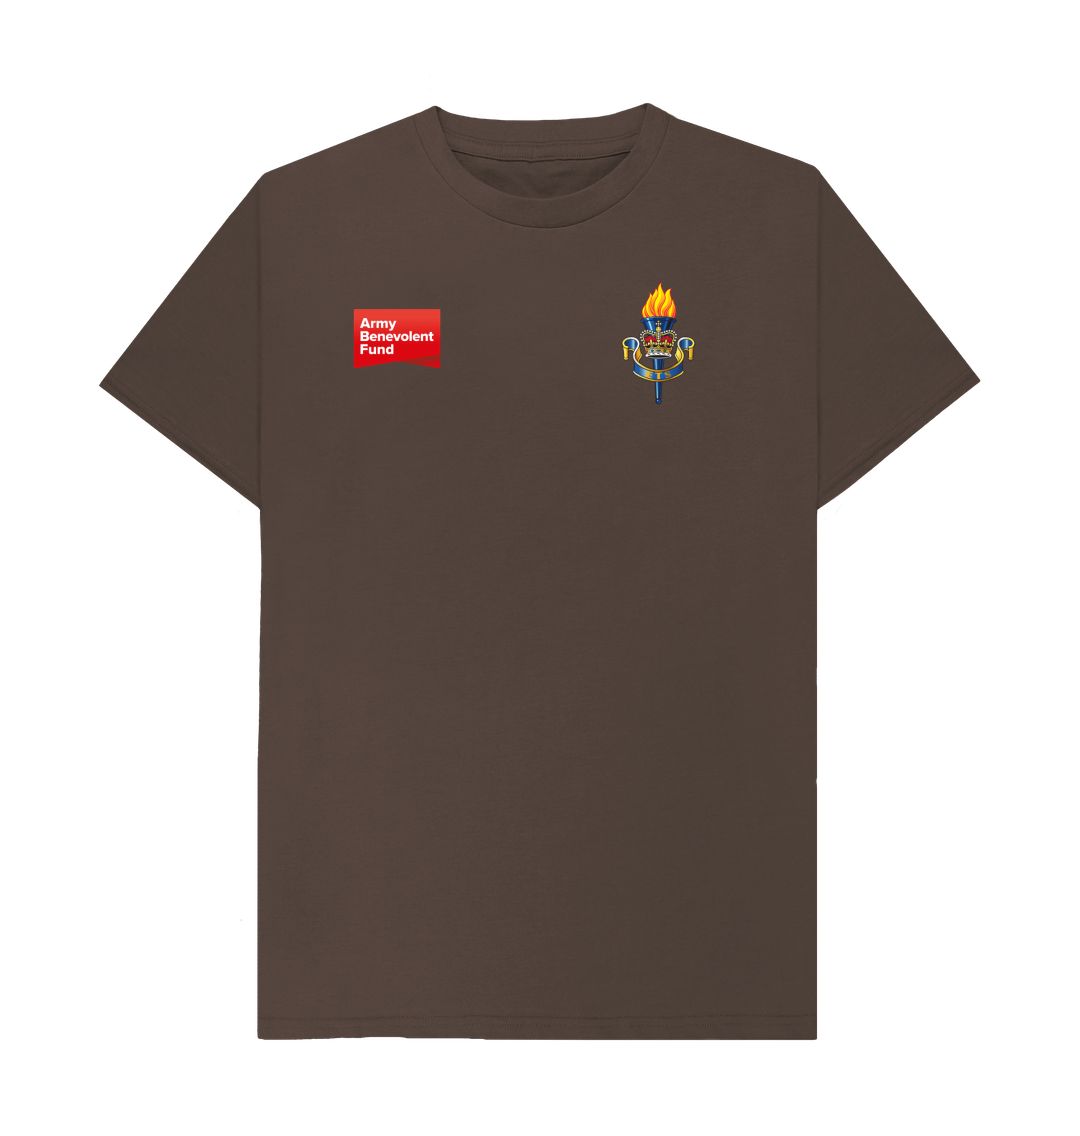 Chocolate Adjutant General's Corps Educational & Training Services Unisex T-shirt